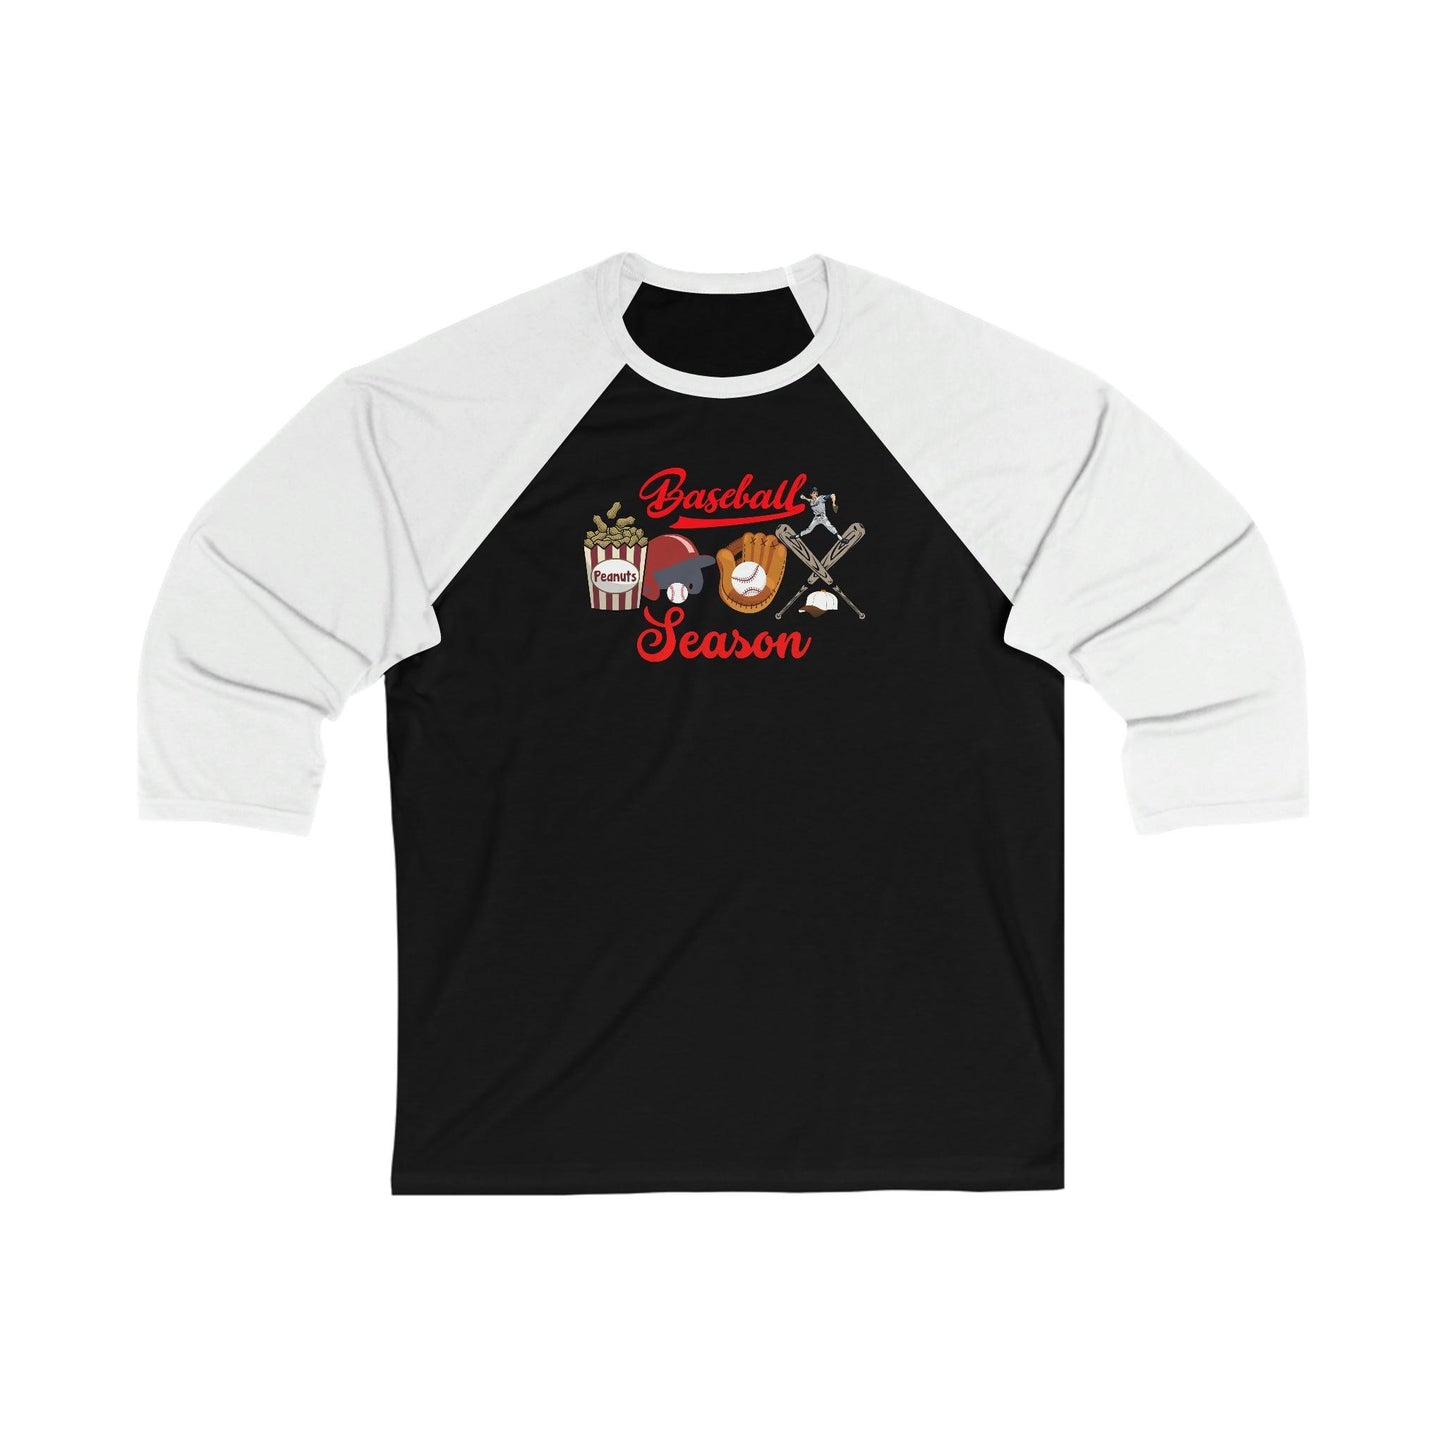 Baseball Season Baseball Tee - sports shirt - gift for baseball lovers - Giftsmojo